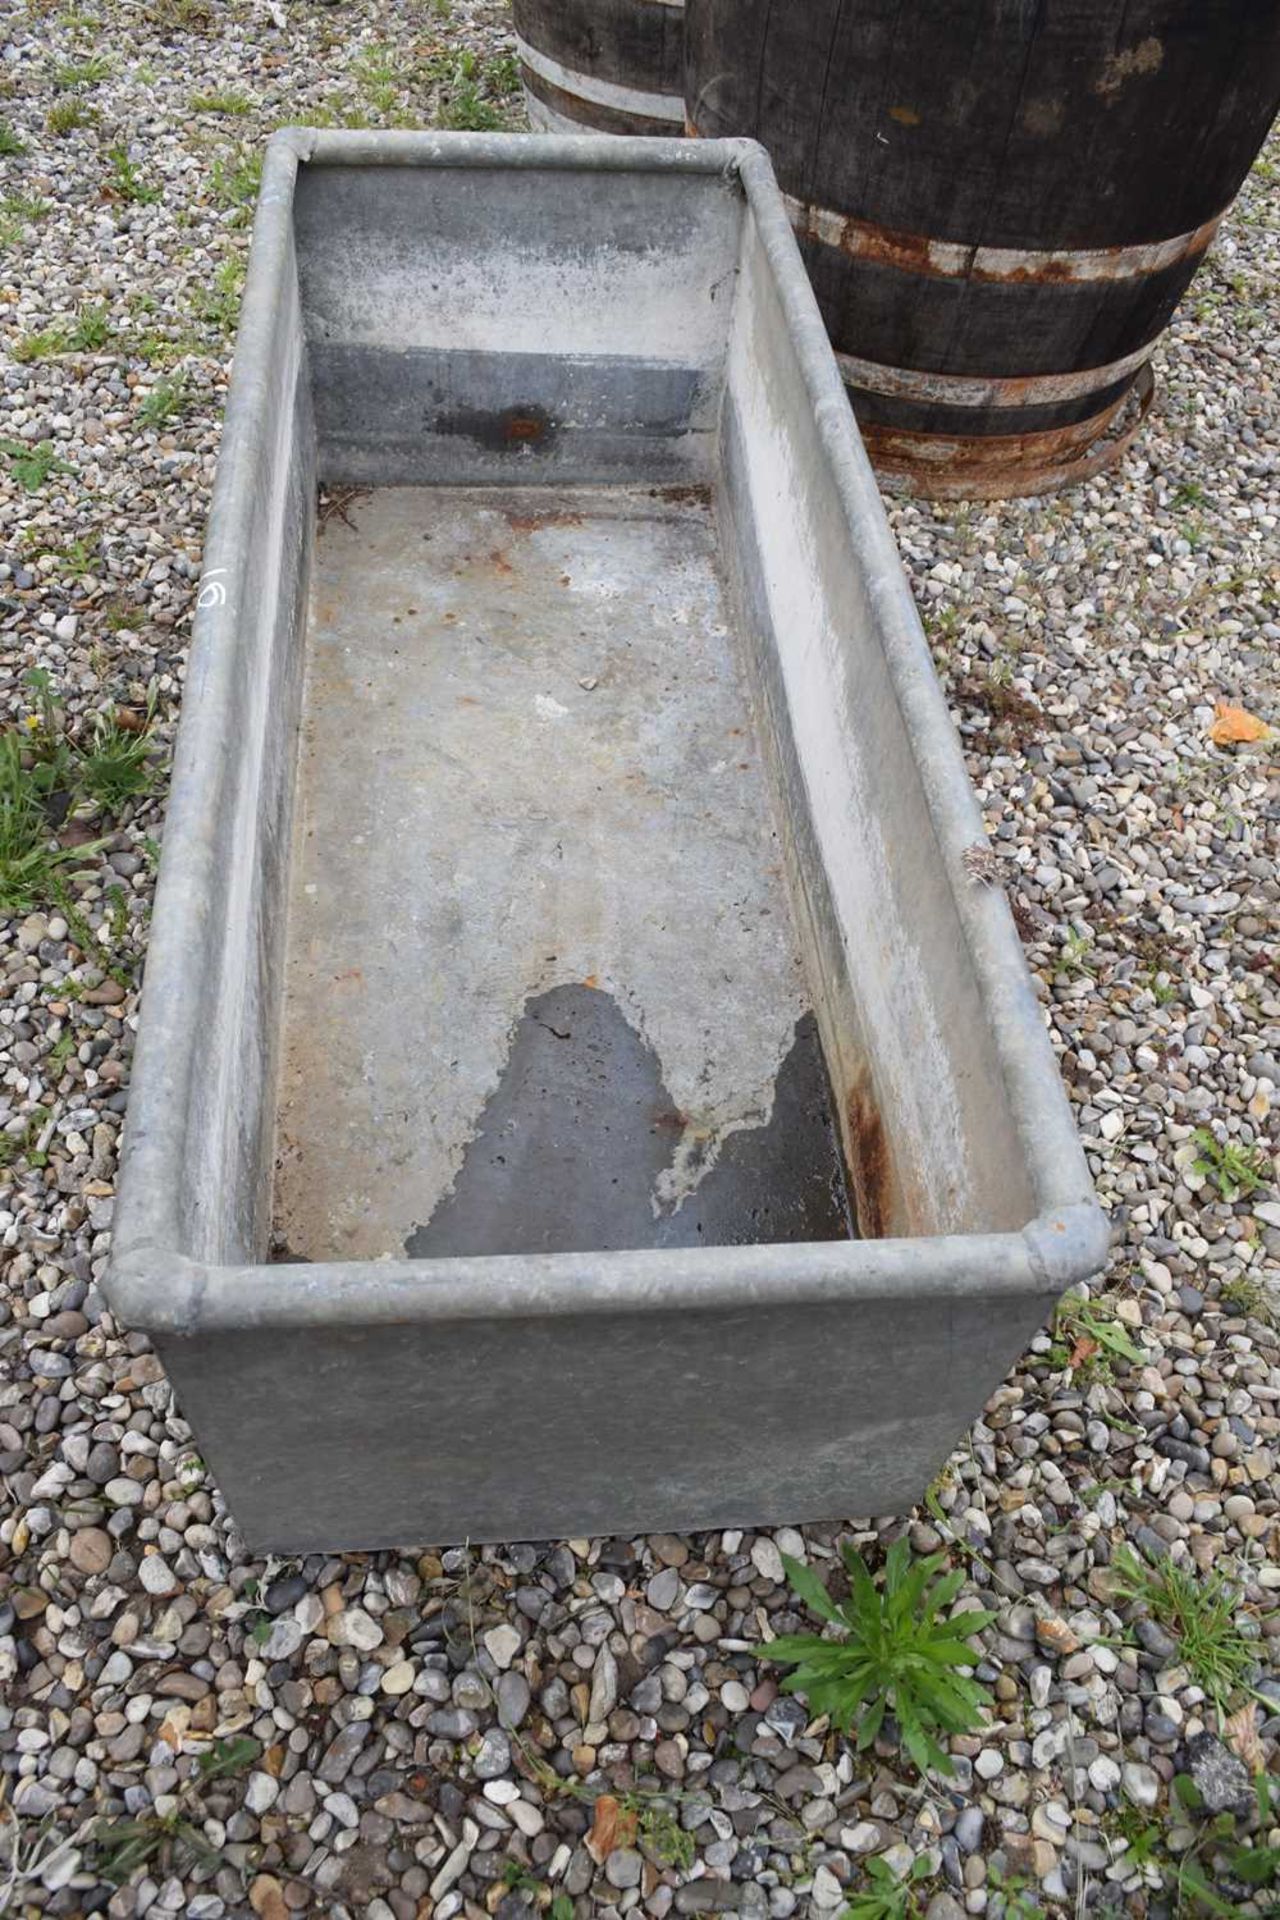 Galvanised water trough, width 120cm, depth 50cm, height 40cm - Image 2 of 2